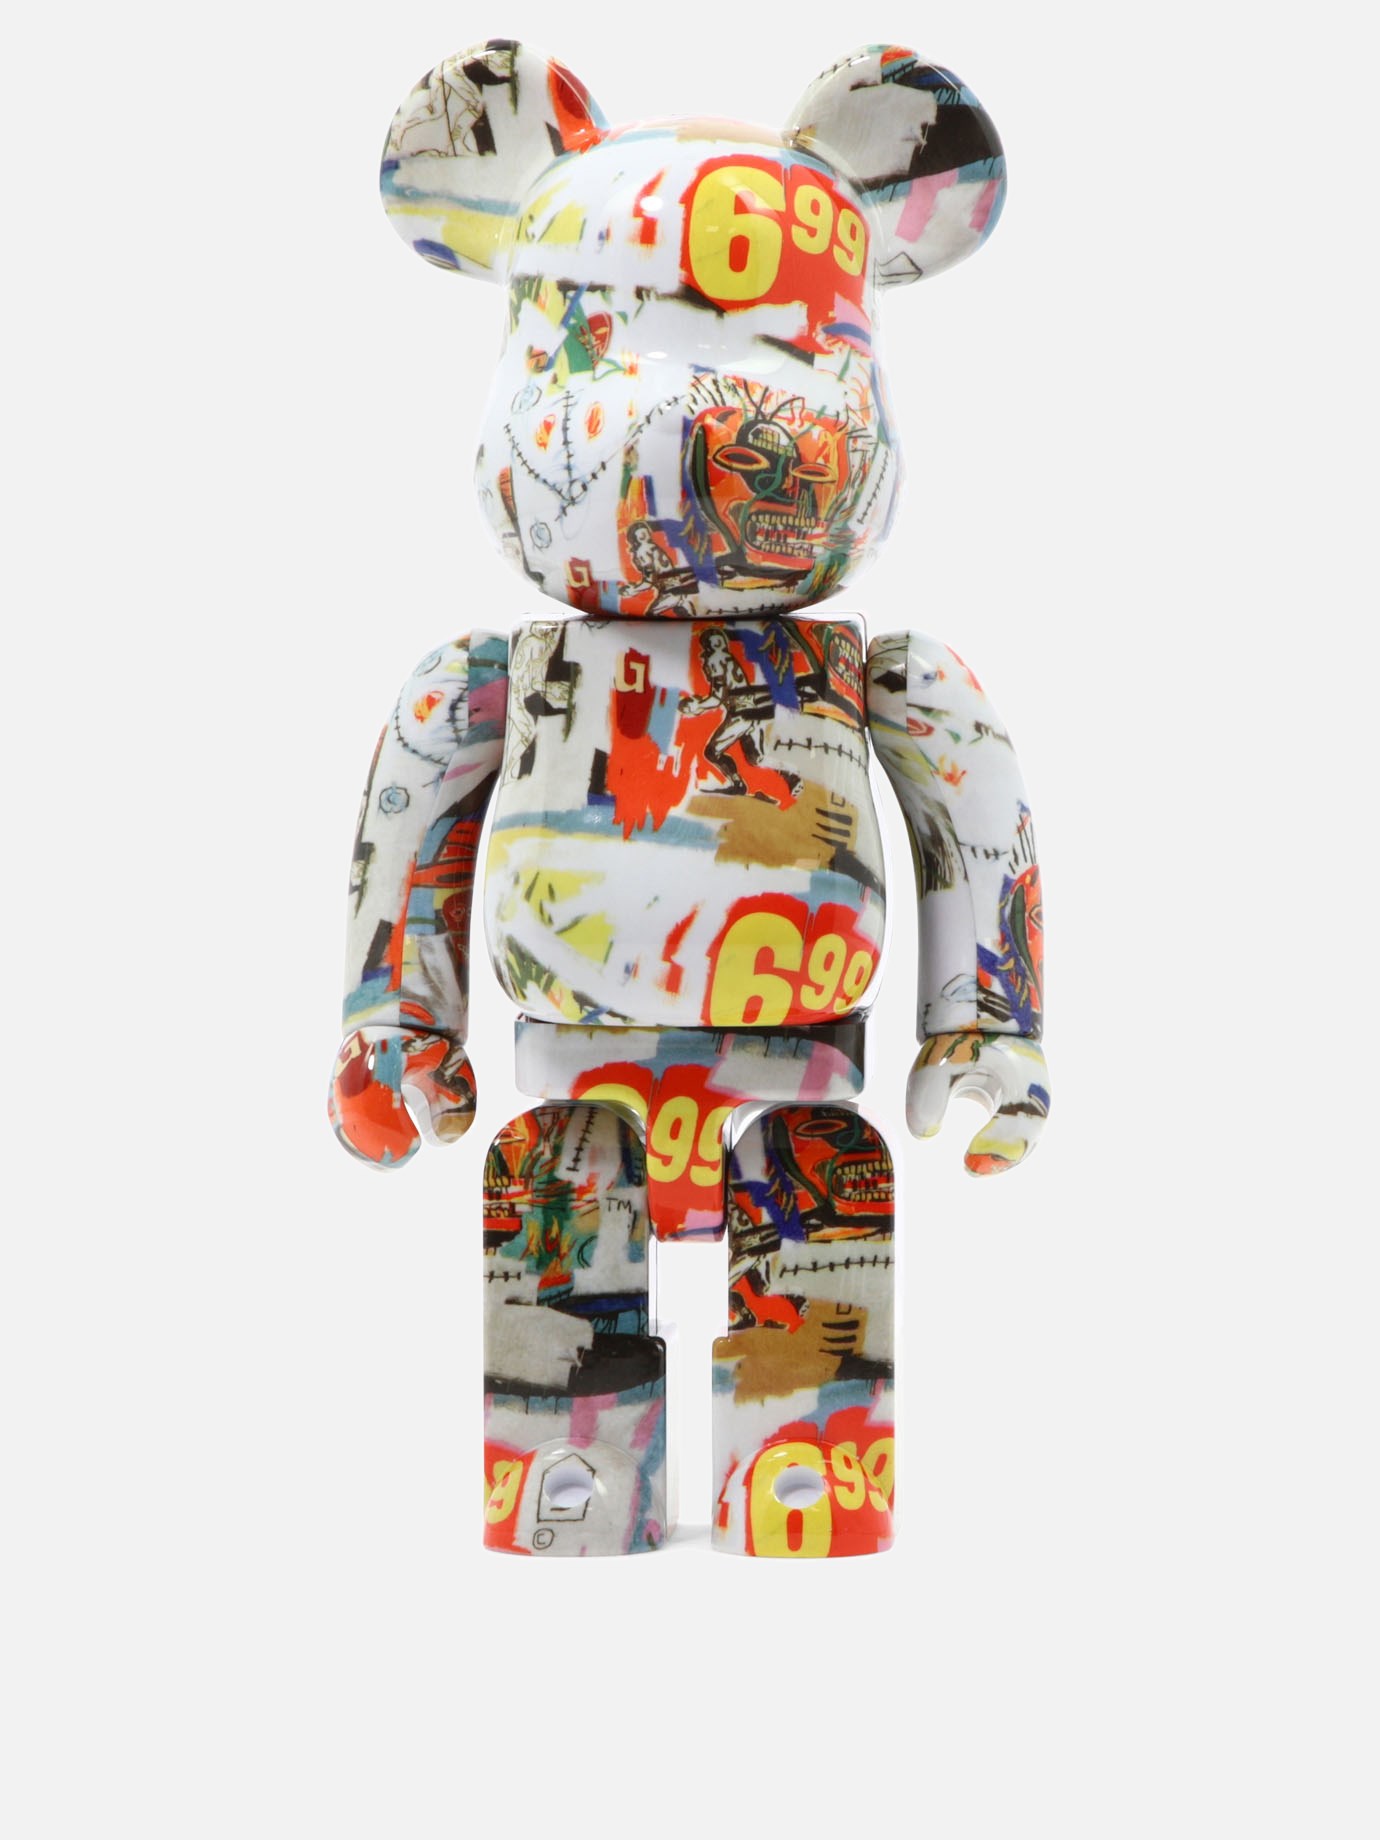  Andy Warhol x Jean-Michel Basquiat  Be@rbrickby Medicom Toy - 5